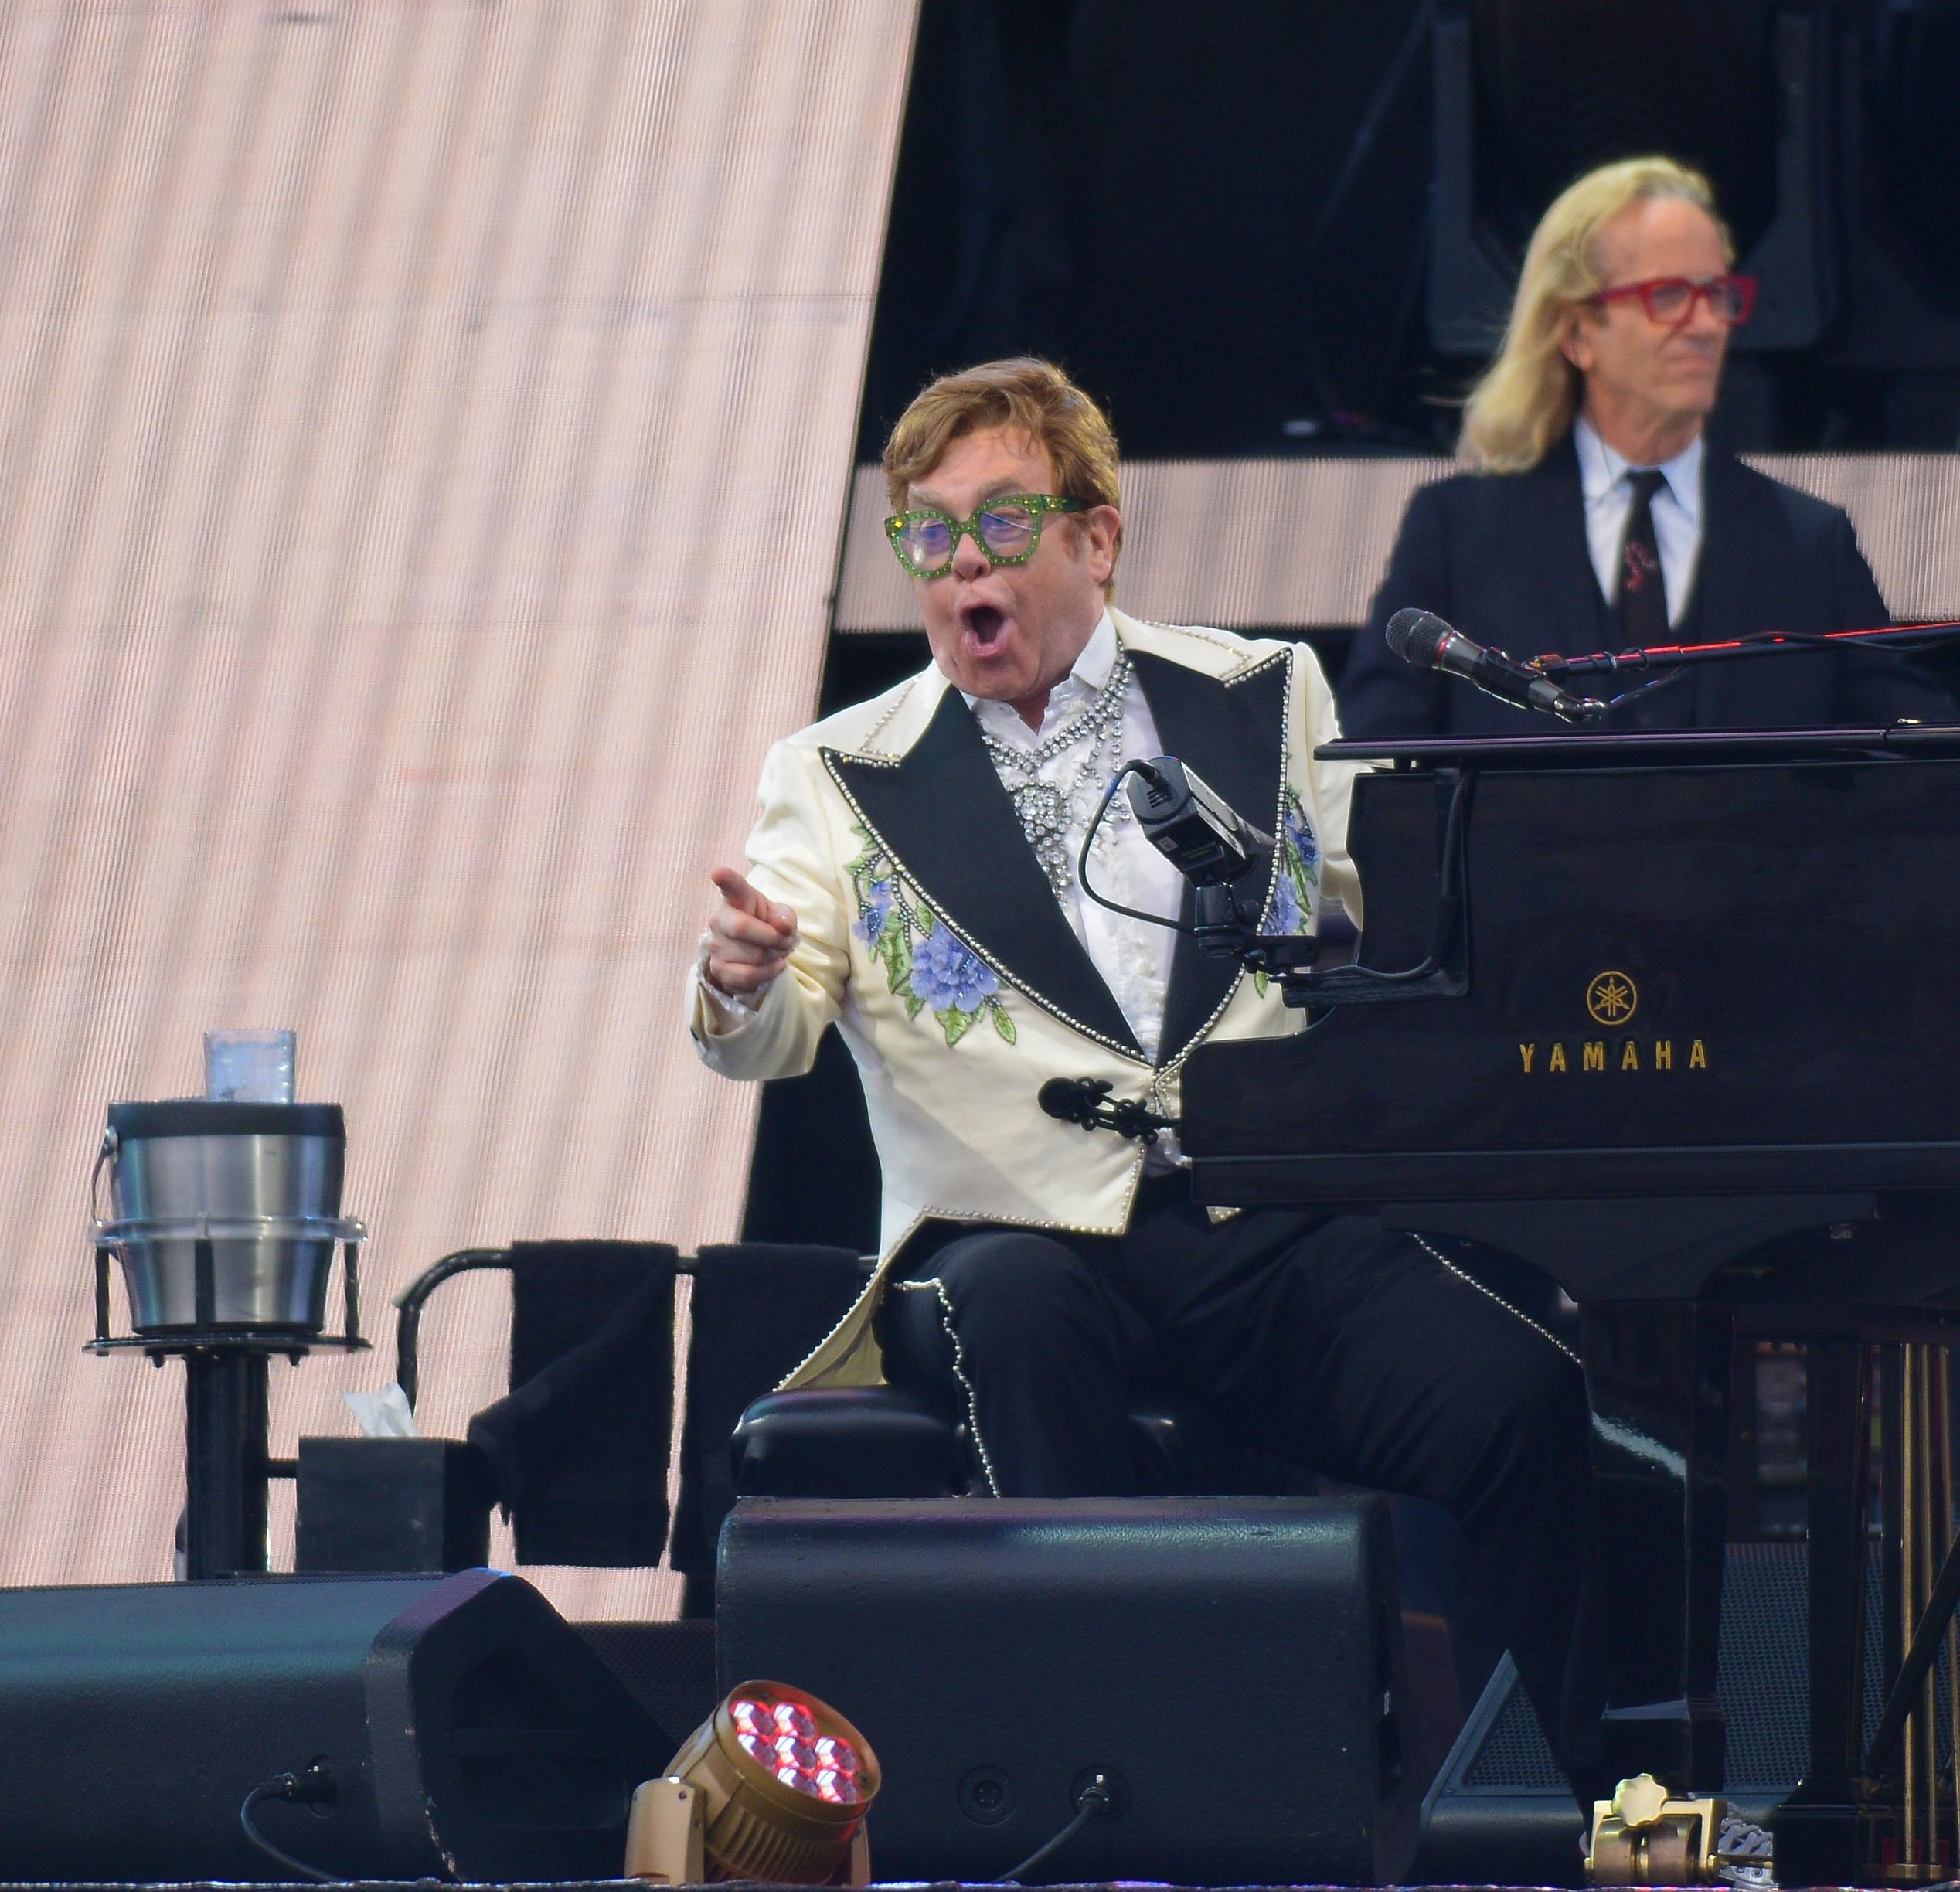 Sir Elton John headlining the BST concert in Hyde Park London England on June 24th 2022